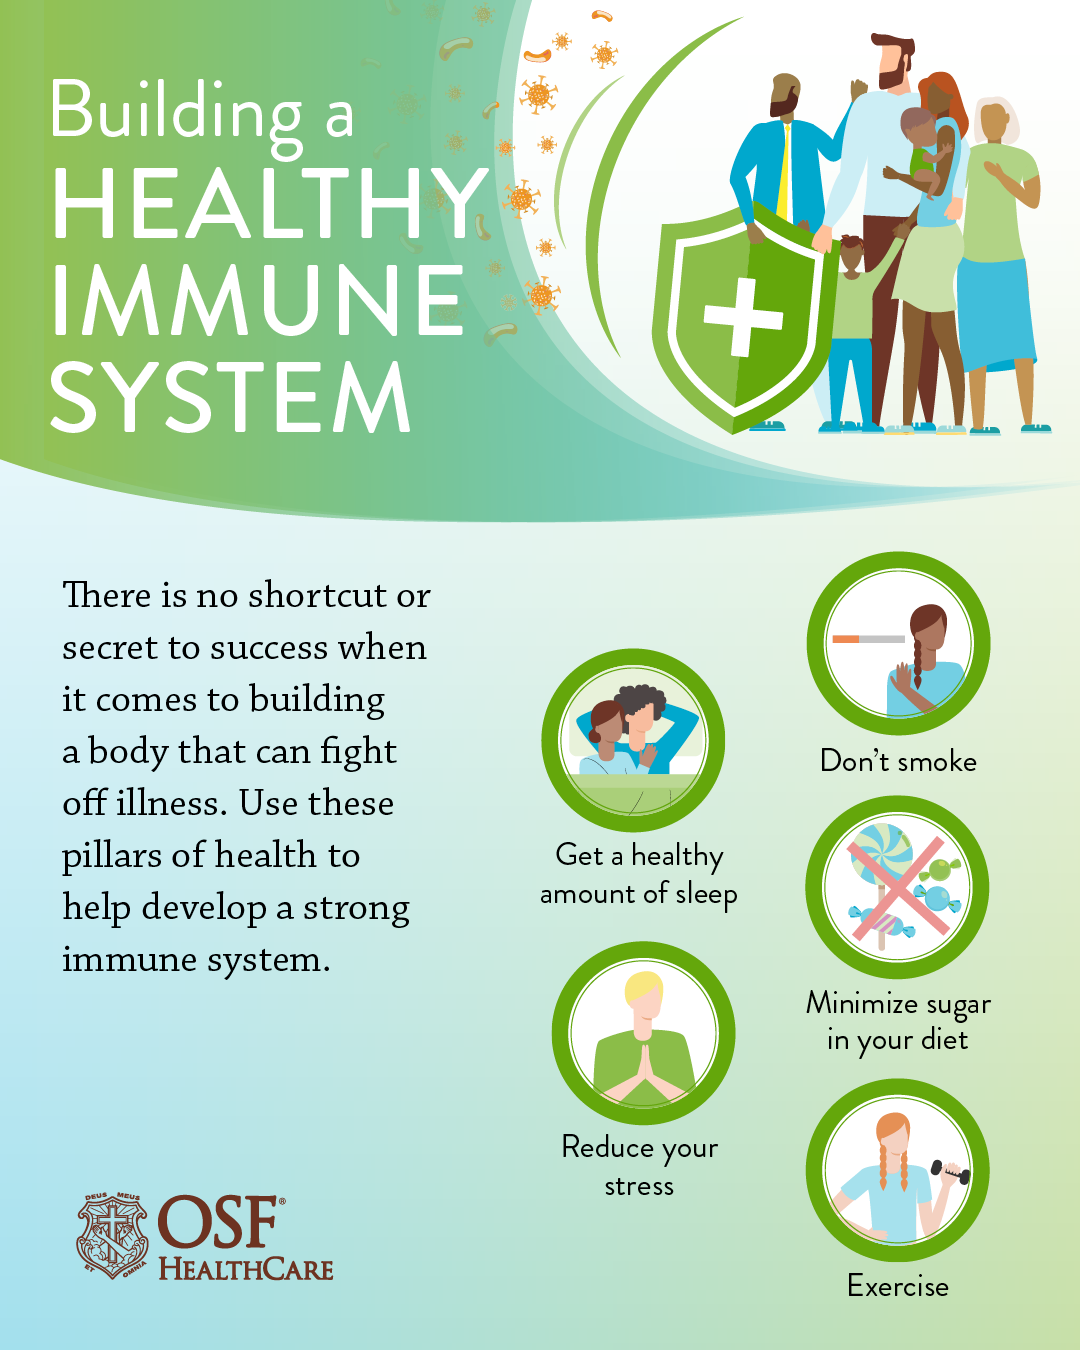 Immune system health